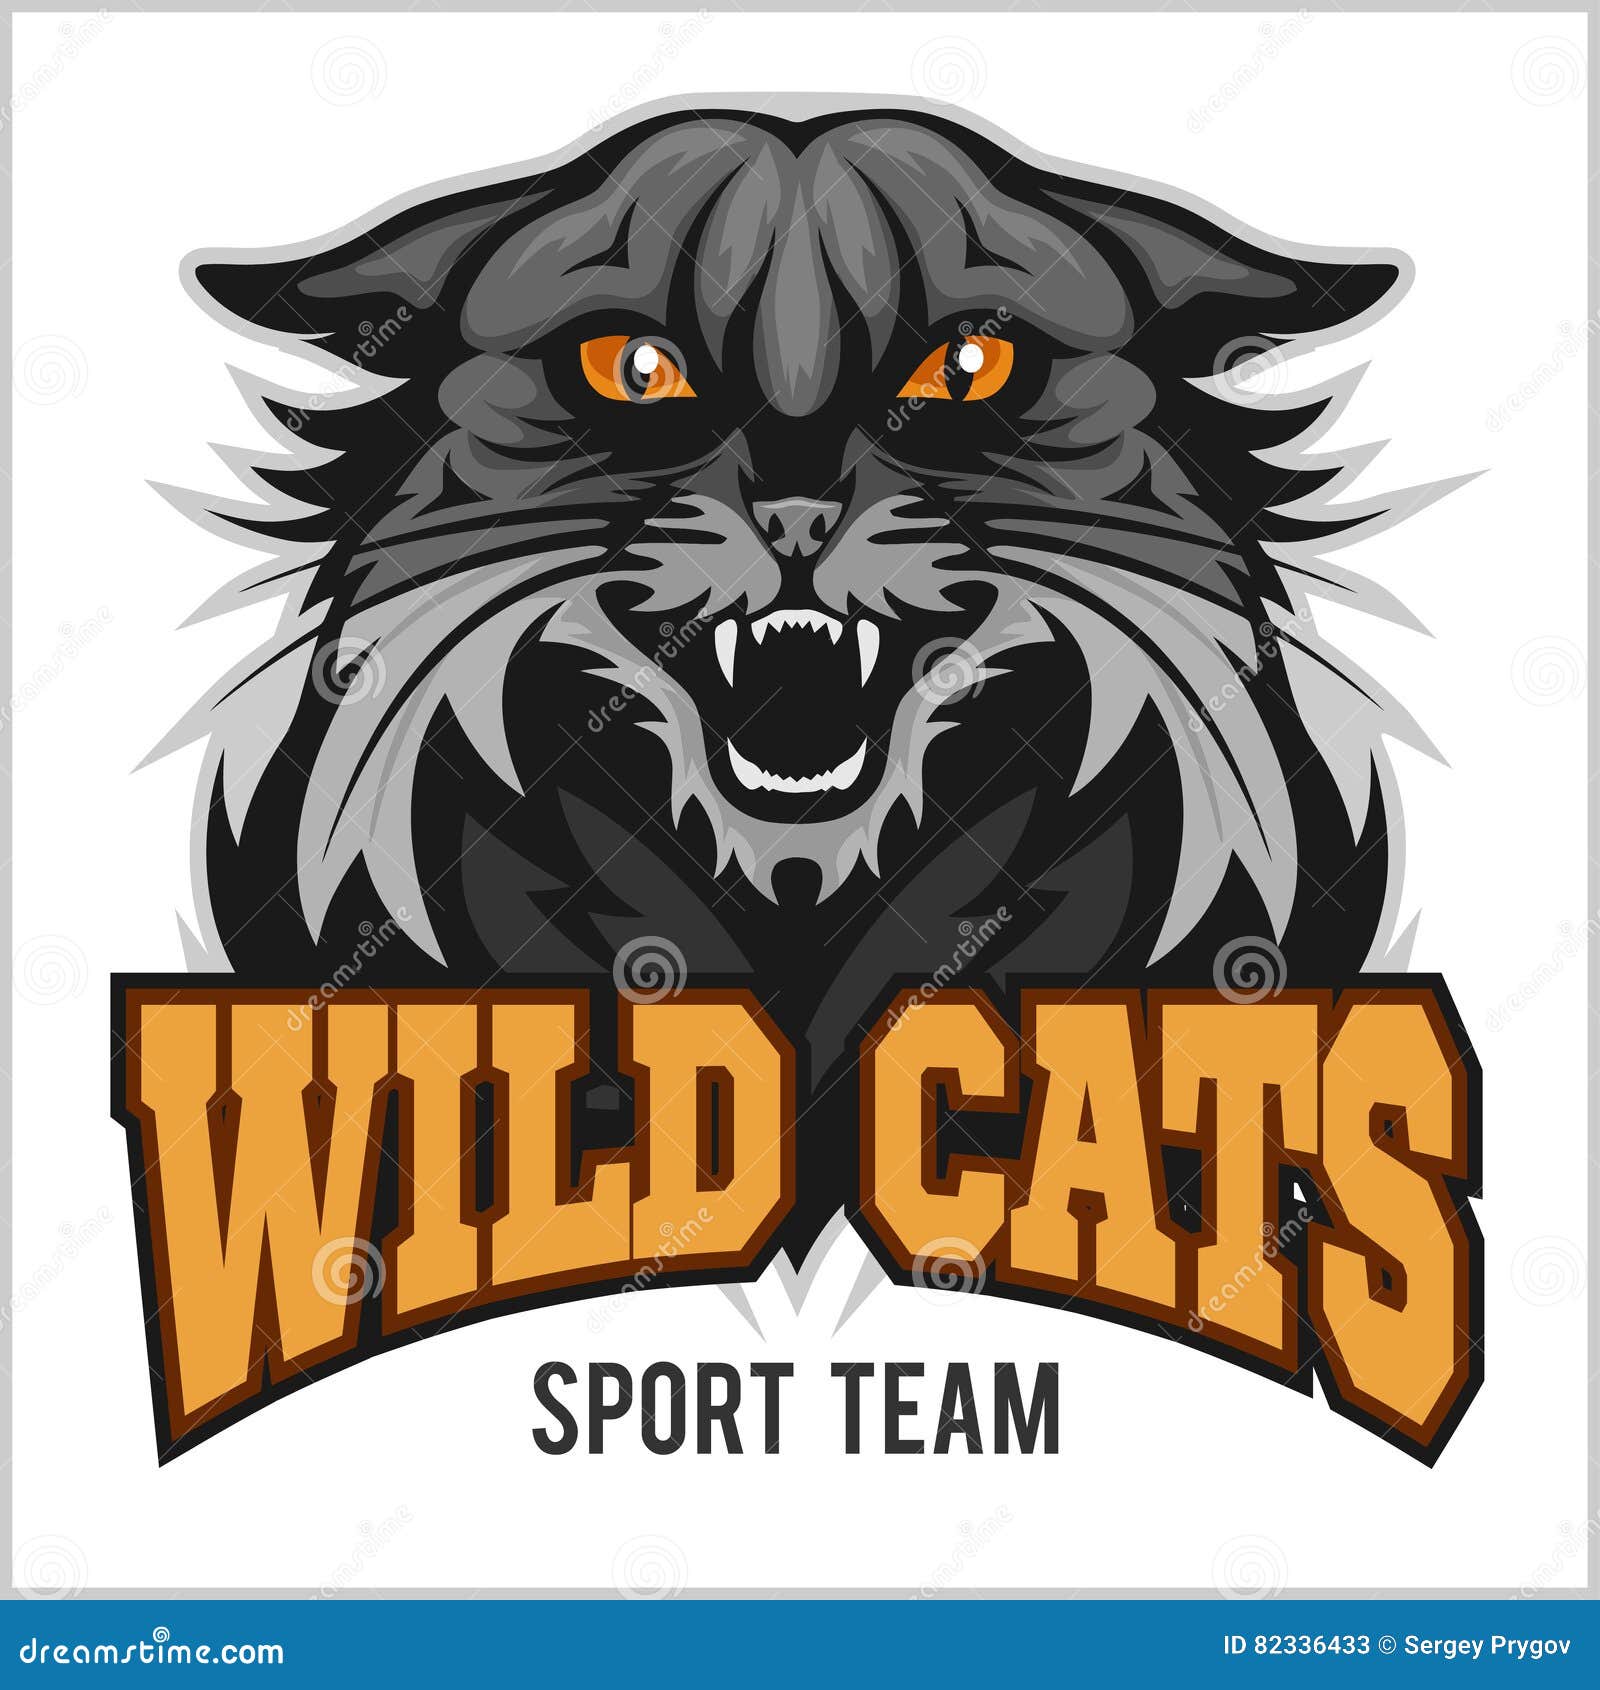 wildcat mascot - sport team.